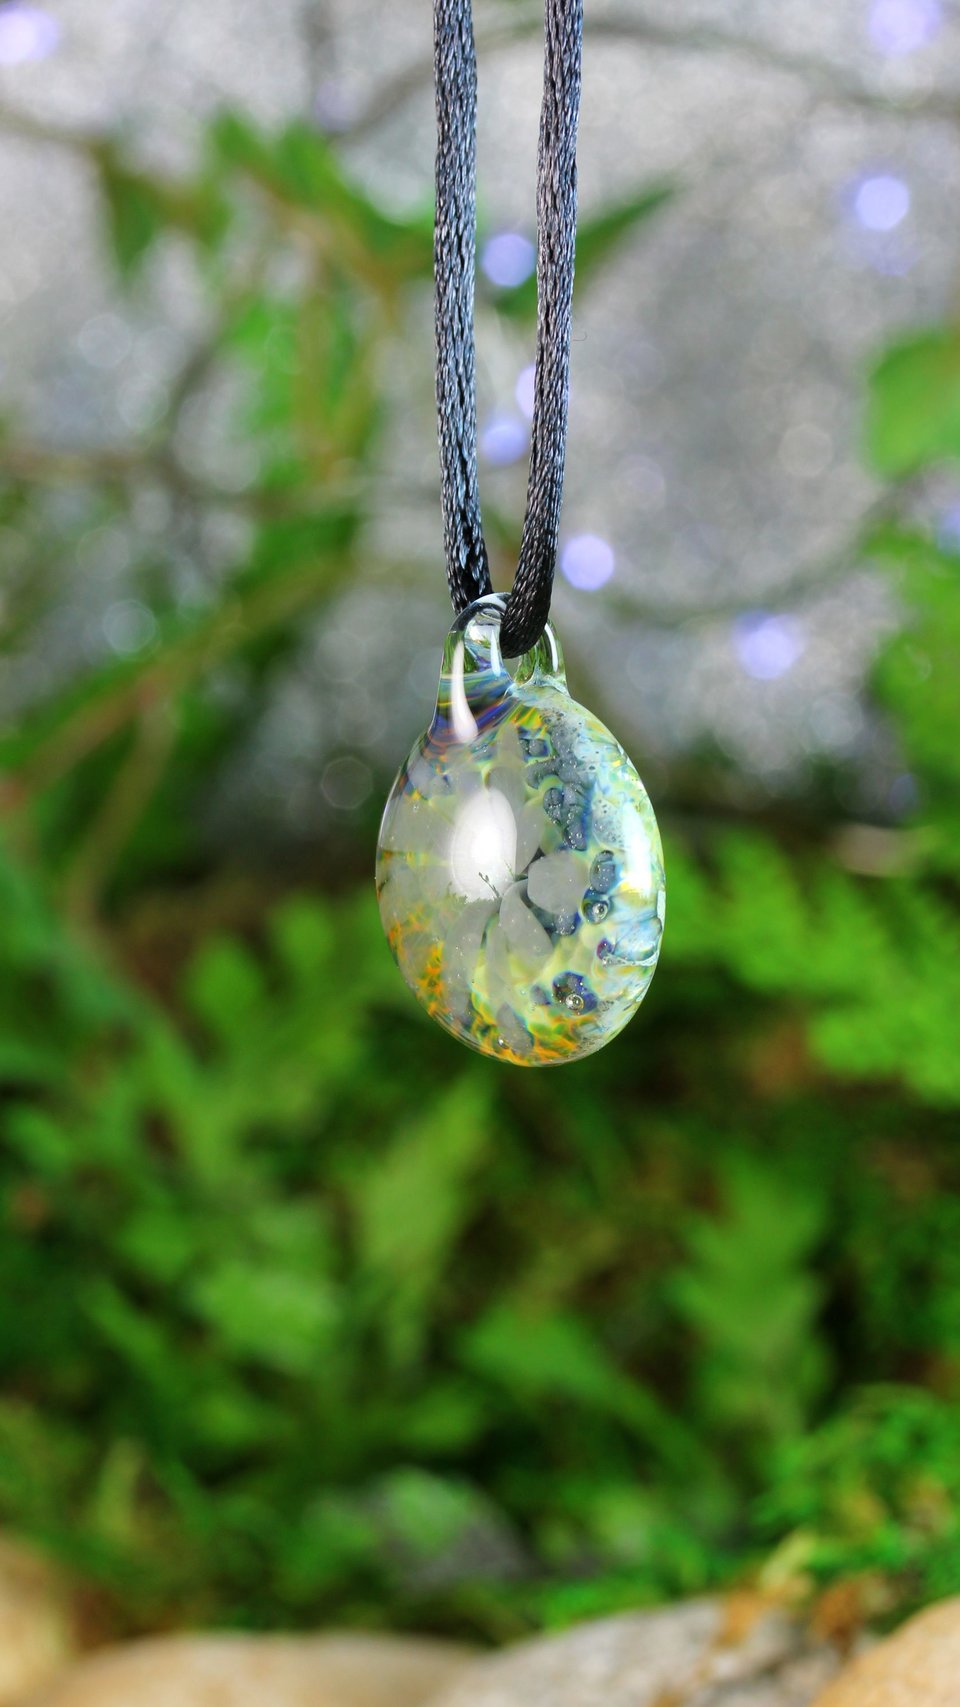 Flower Implosion Lampwork Pendant Necklace // Brosilicate/Boro Glass // Dark Blue, Gray, Yellow Speckled Glitter // Z1132